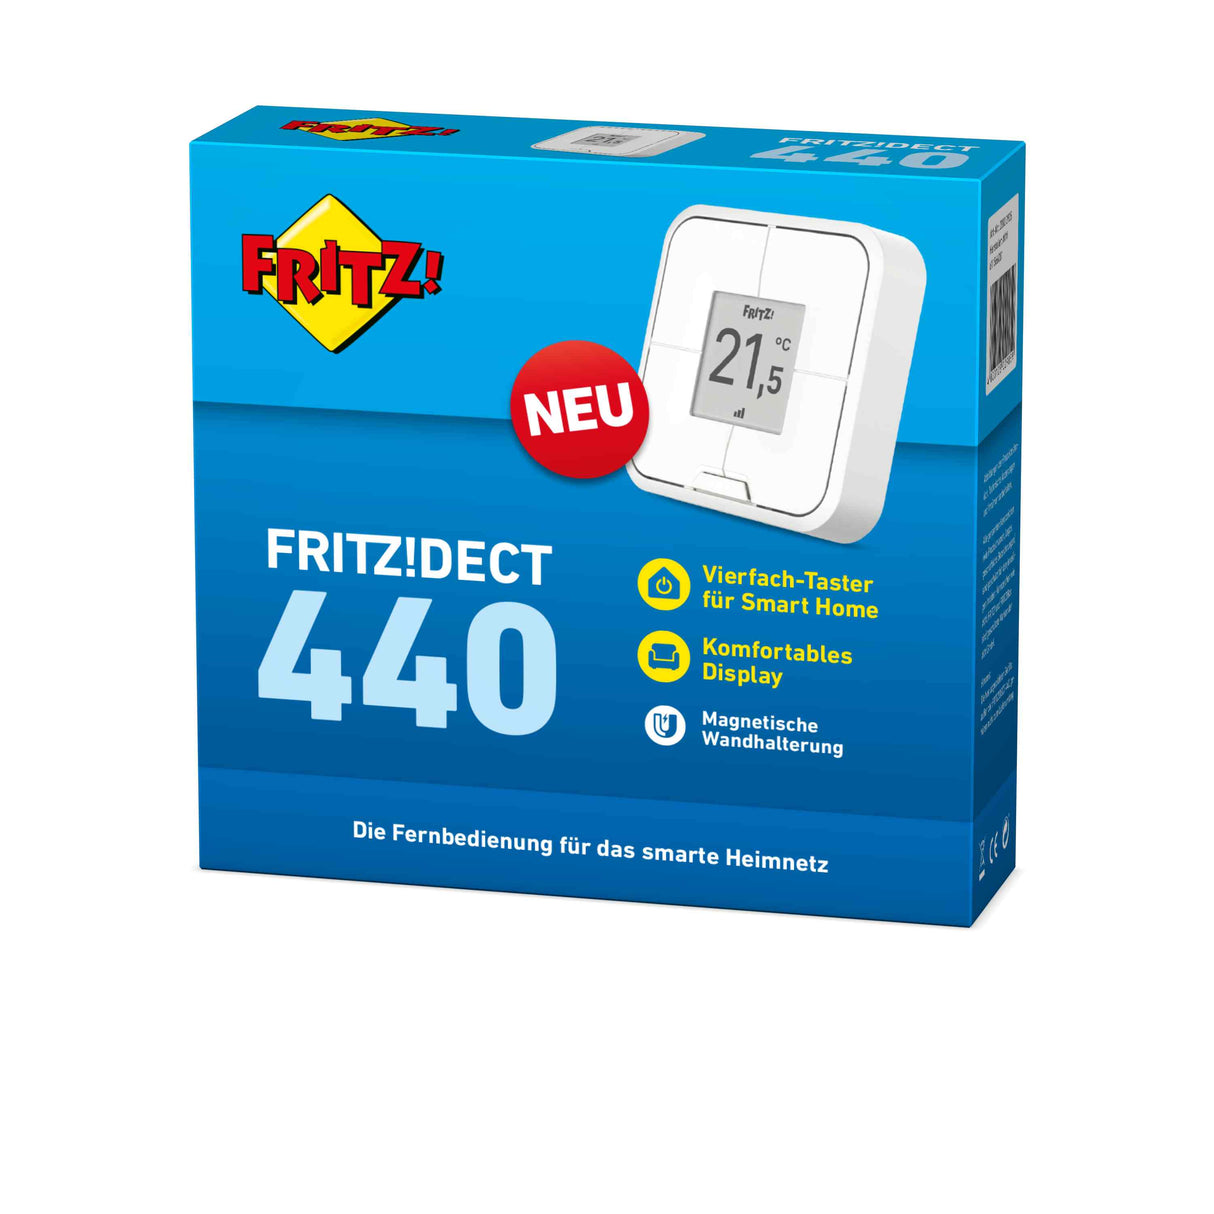 AVM FRITZ!DECT 440 Vierfach-Taster inkl. Temperatursensor